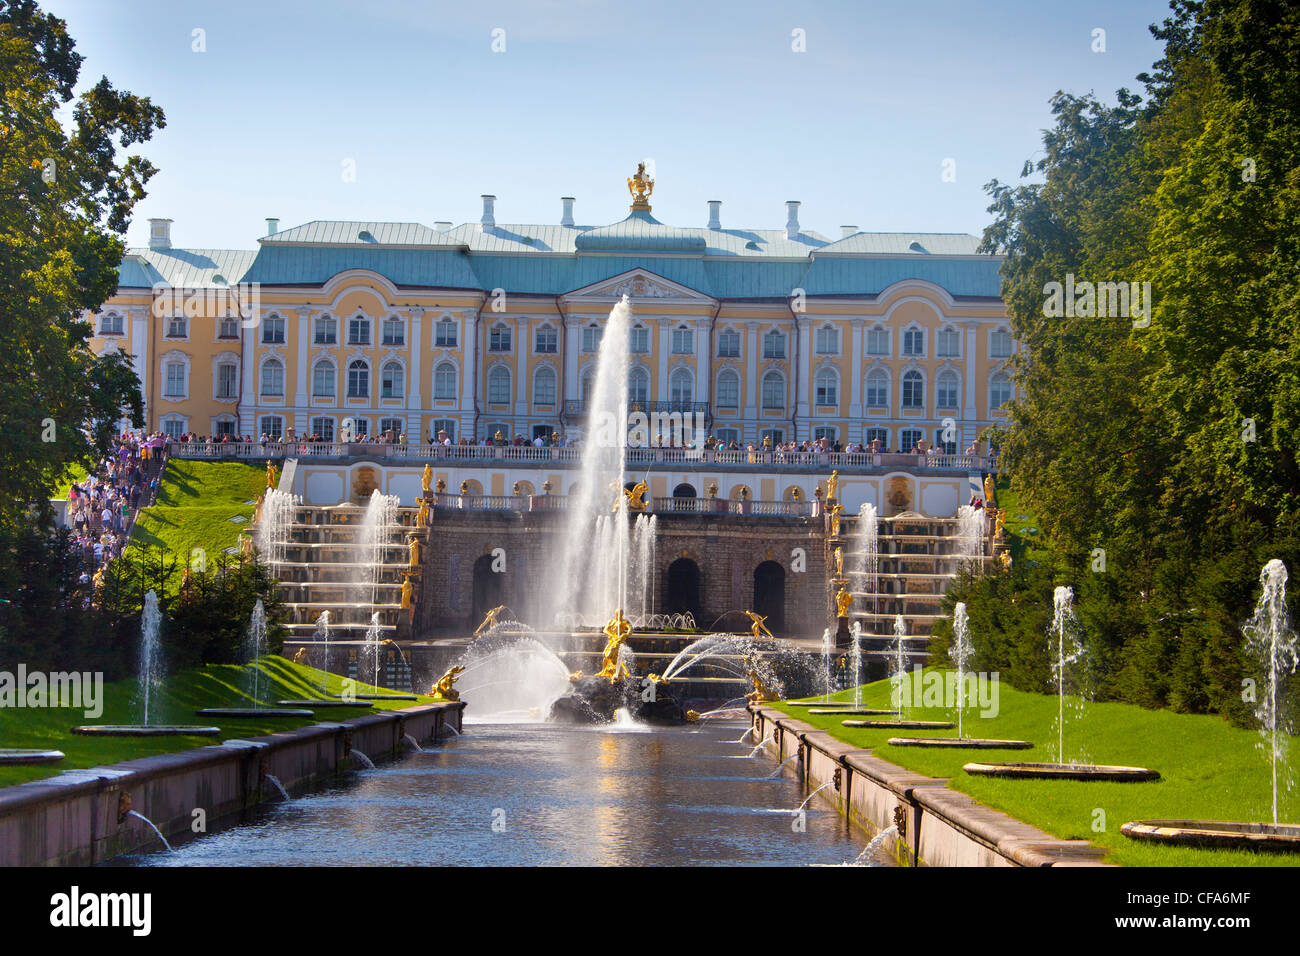 Russia, Europa, San Pietroburgo, Peterburg, città di Peterhof Palace, il Summer Palace, patrimonio mondiale, parco, fontana, stagno Foto Stock